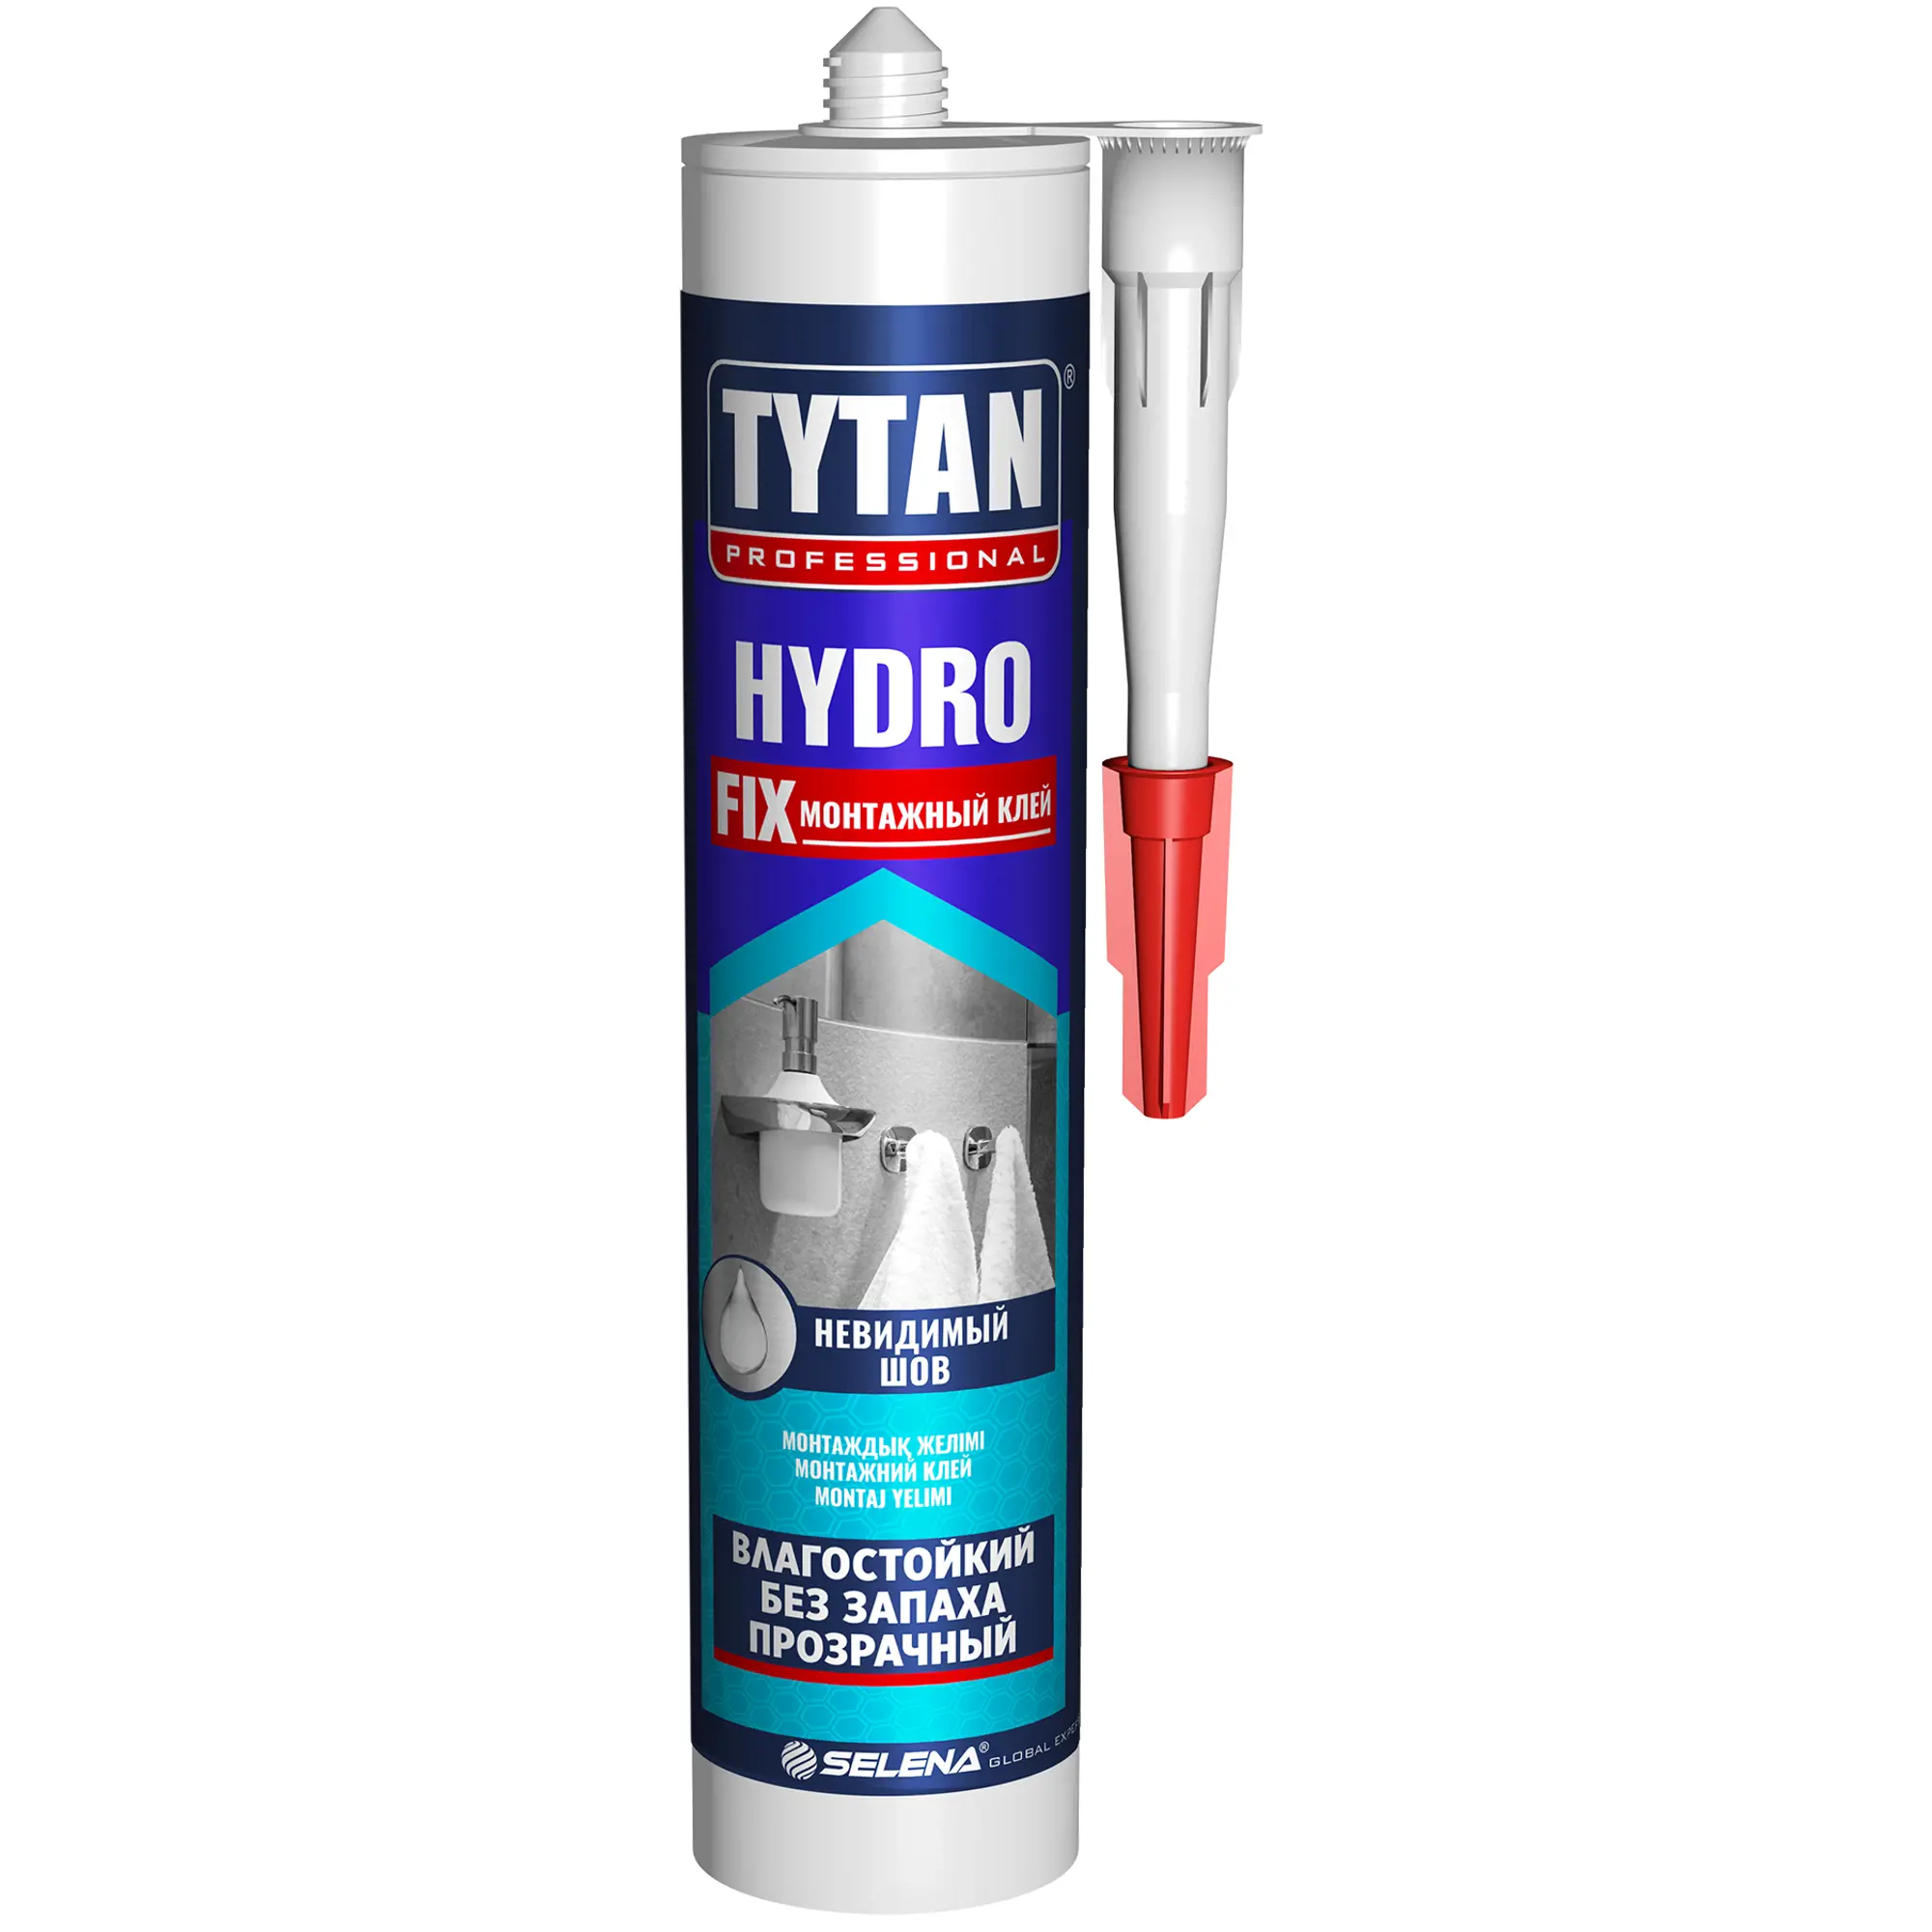 Tytan fix прозрачный. Клей монтажный Tytan professional Hydro Fix, 310 мл. Tytan professional Hydro Fix. Клей монтажный акриловый Tytan Hydro Fix прозрачный 310 мл. Монтажный клей Tytan professional Classic Fix 310 мл.